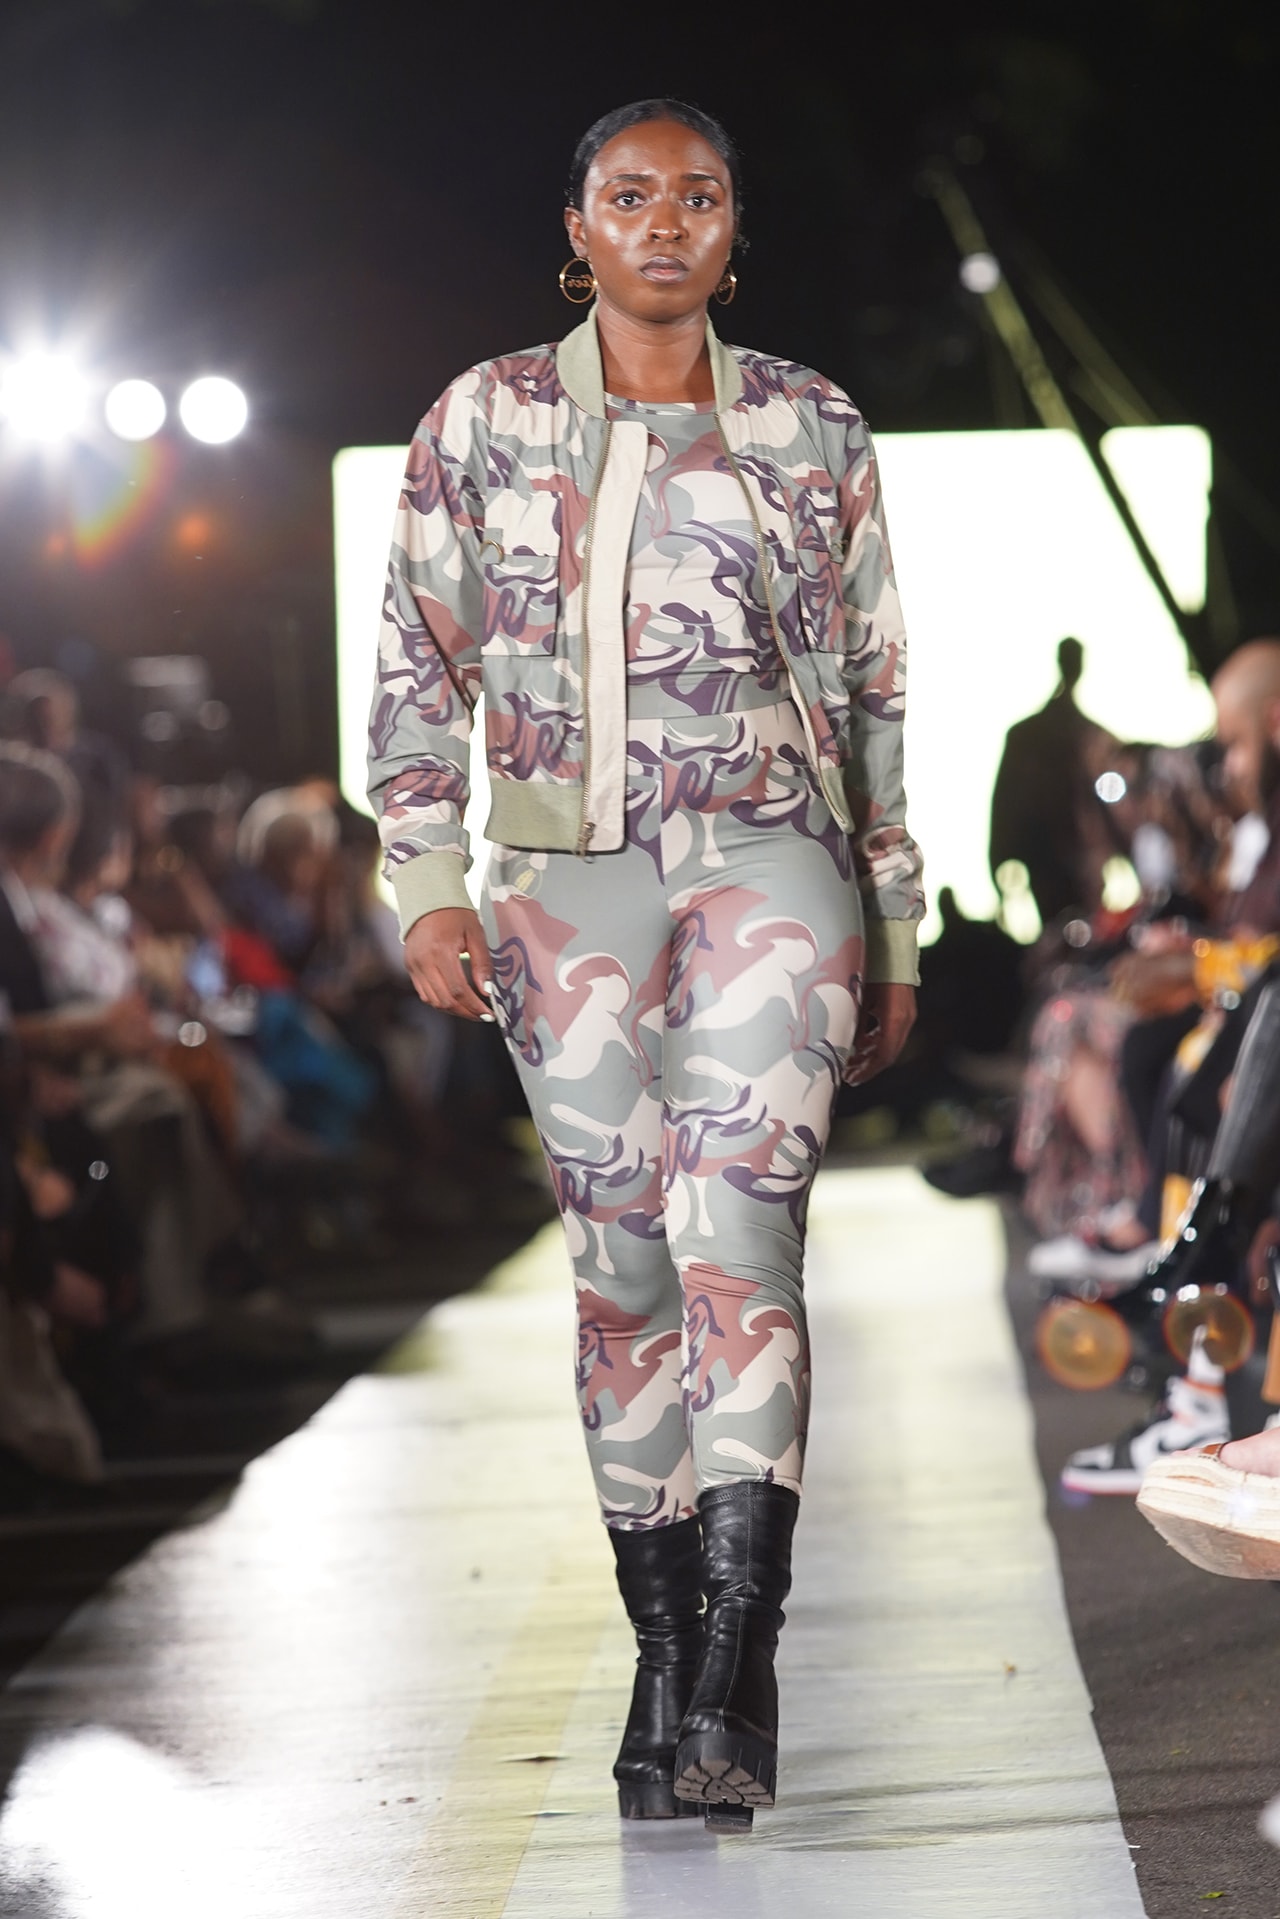 TIER Harlem's Fashion Row Runway Show New York NYFW Nigeria Ealey Victor James Esaīe Jean Simon Black Owned Brand Brooklyn Camo Jacket Pants